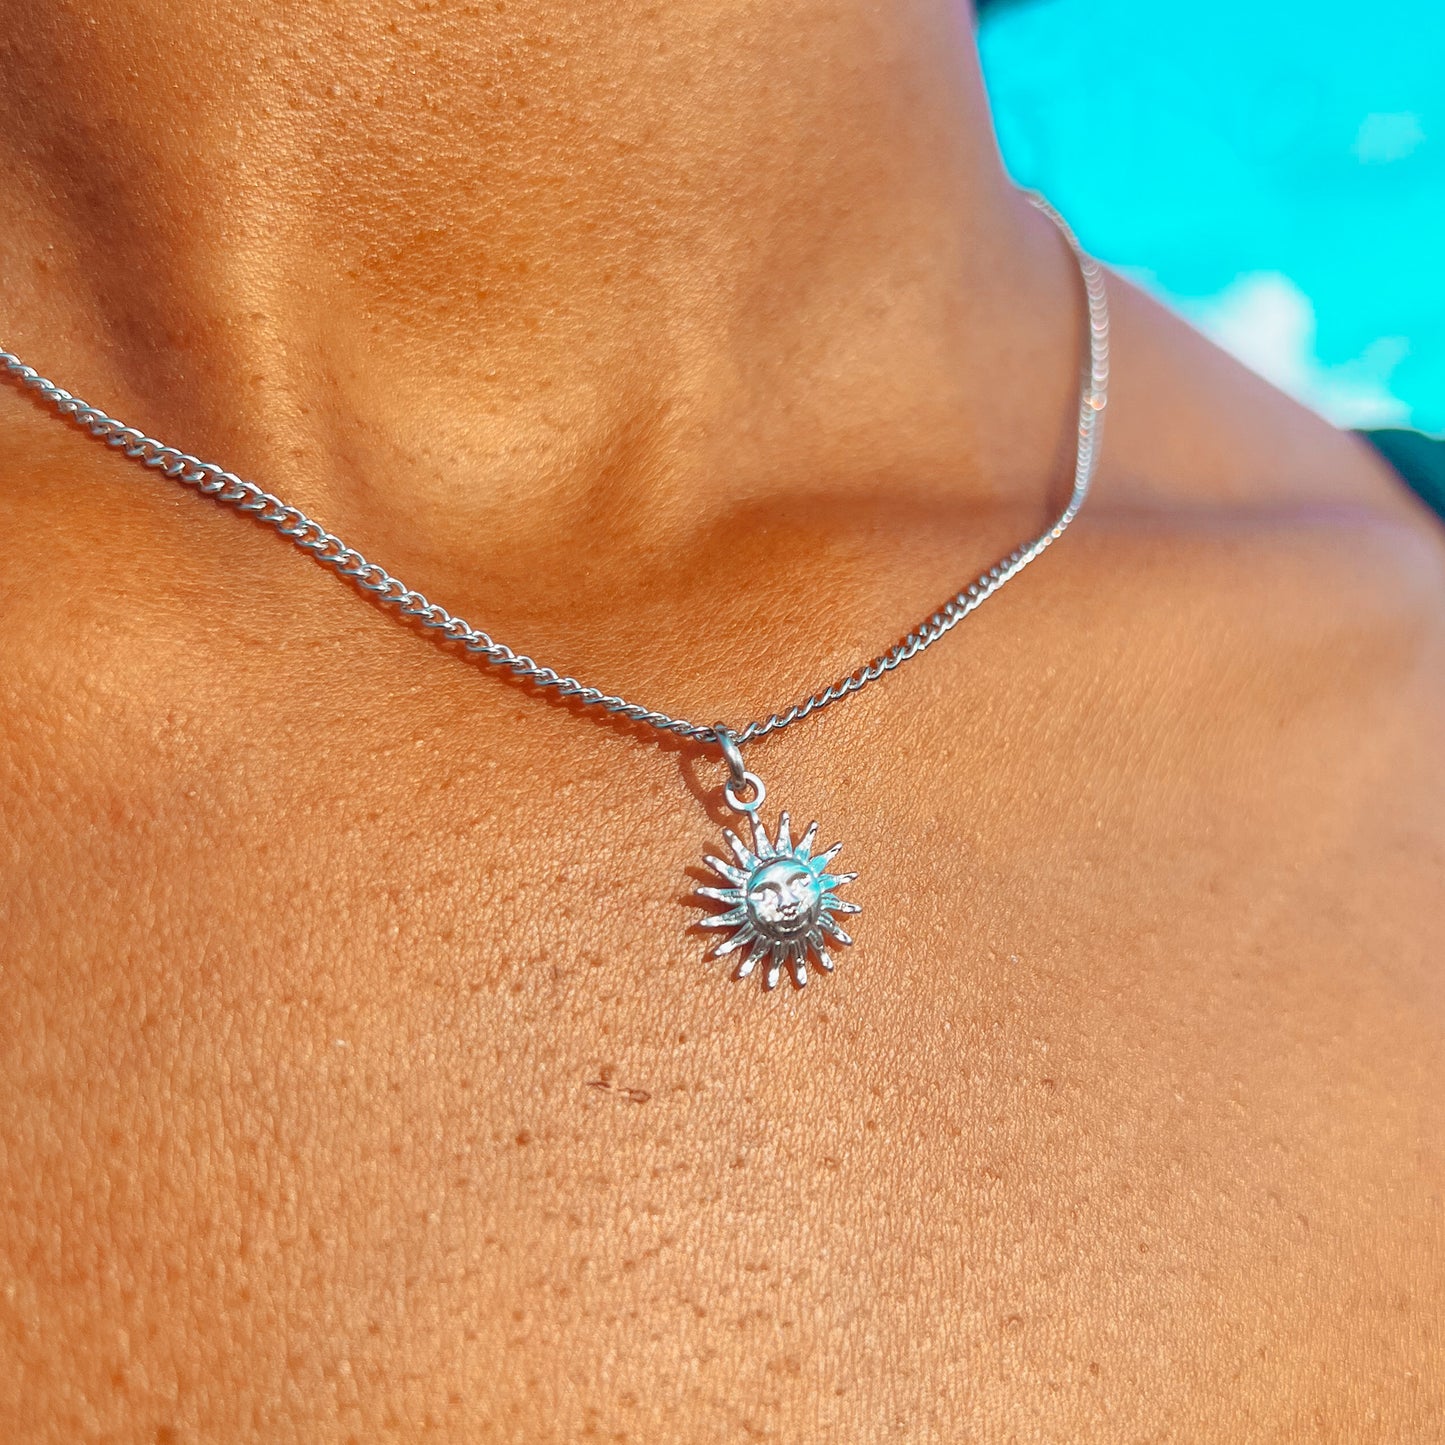 Silver sun necklace